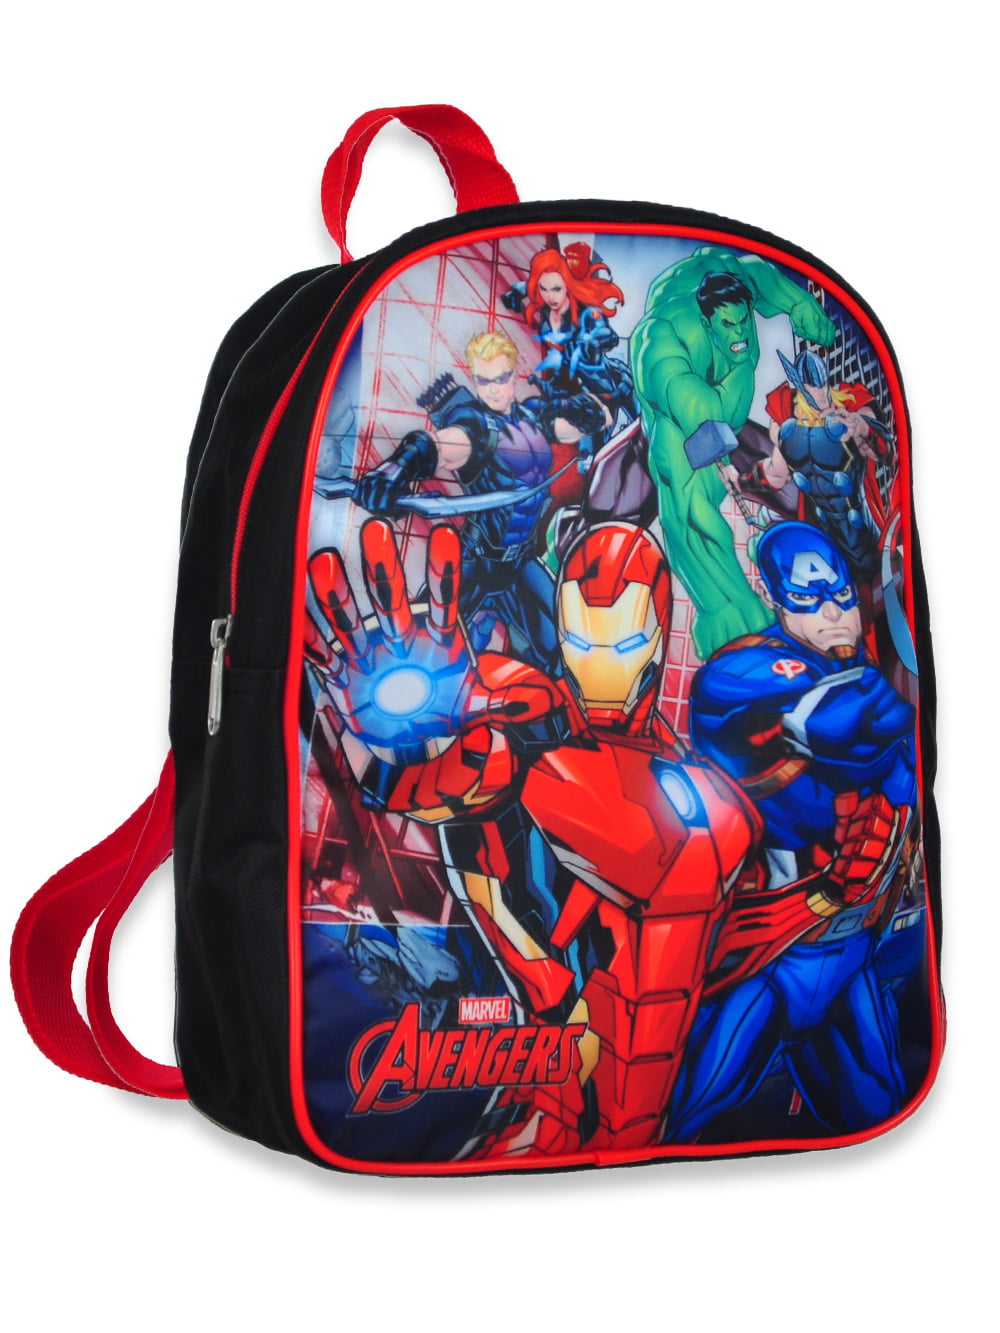 Marvel Comics Avengers Assemble Boy's Trolley Luggage Backpack & Mini Book-Bag 